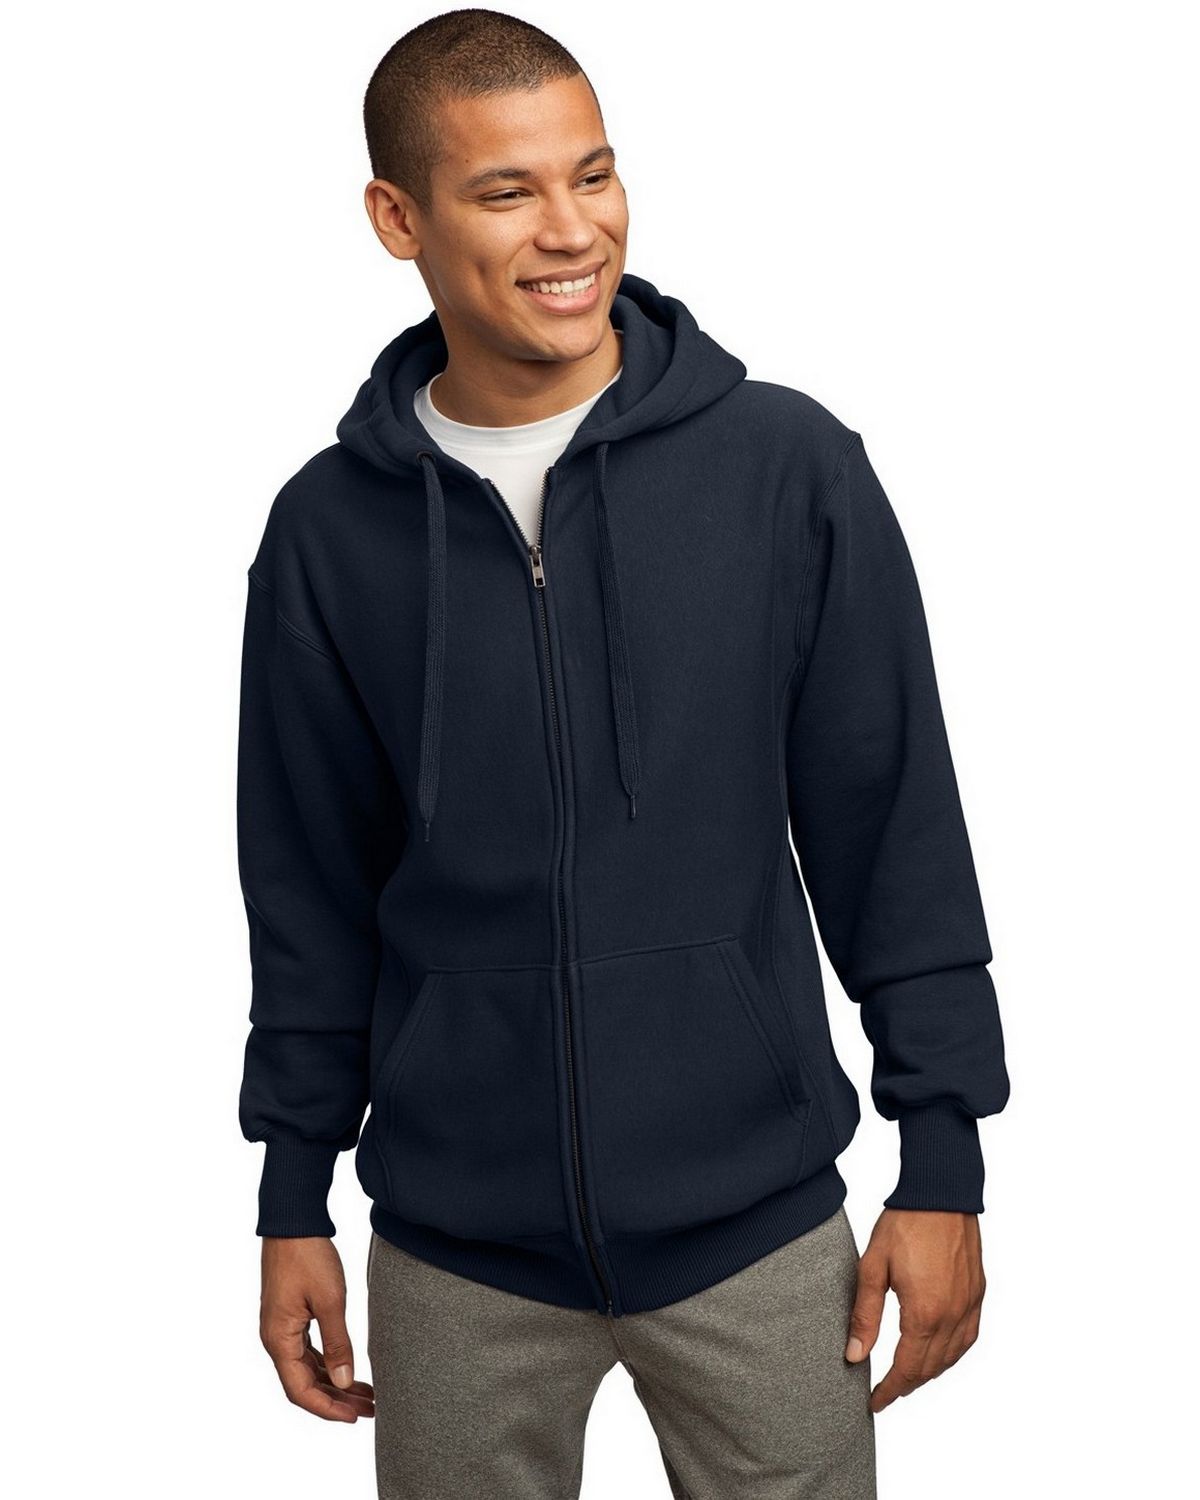 Marky G Apparel Mens Flex Fleece Full-Zip Hooded Sweatshirt 3 Packs Dark Heather Gr Jacket 3 Pack 2XL 